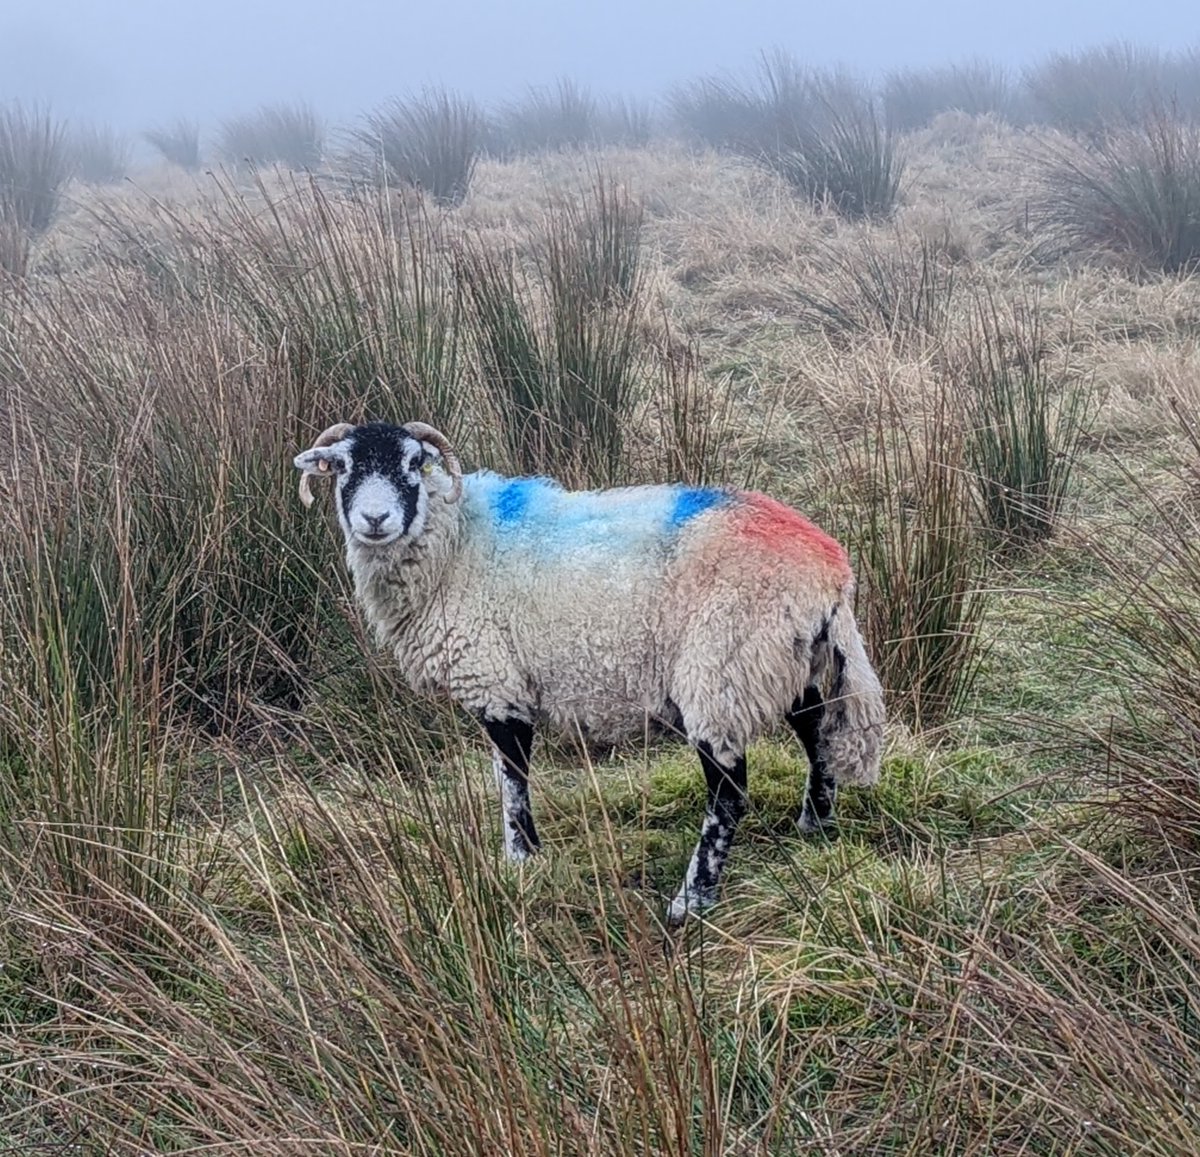 Yorkshire Moors in the mist. #oakworth #haworth #keighley #bradford #yorkshire #walkshire